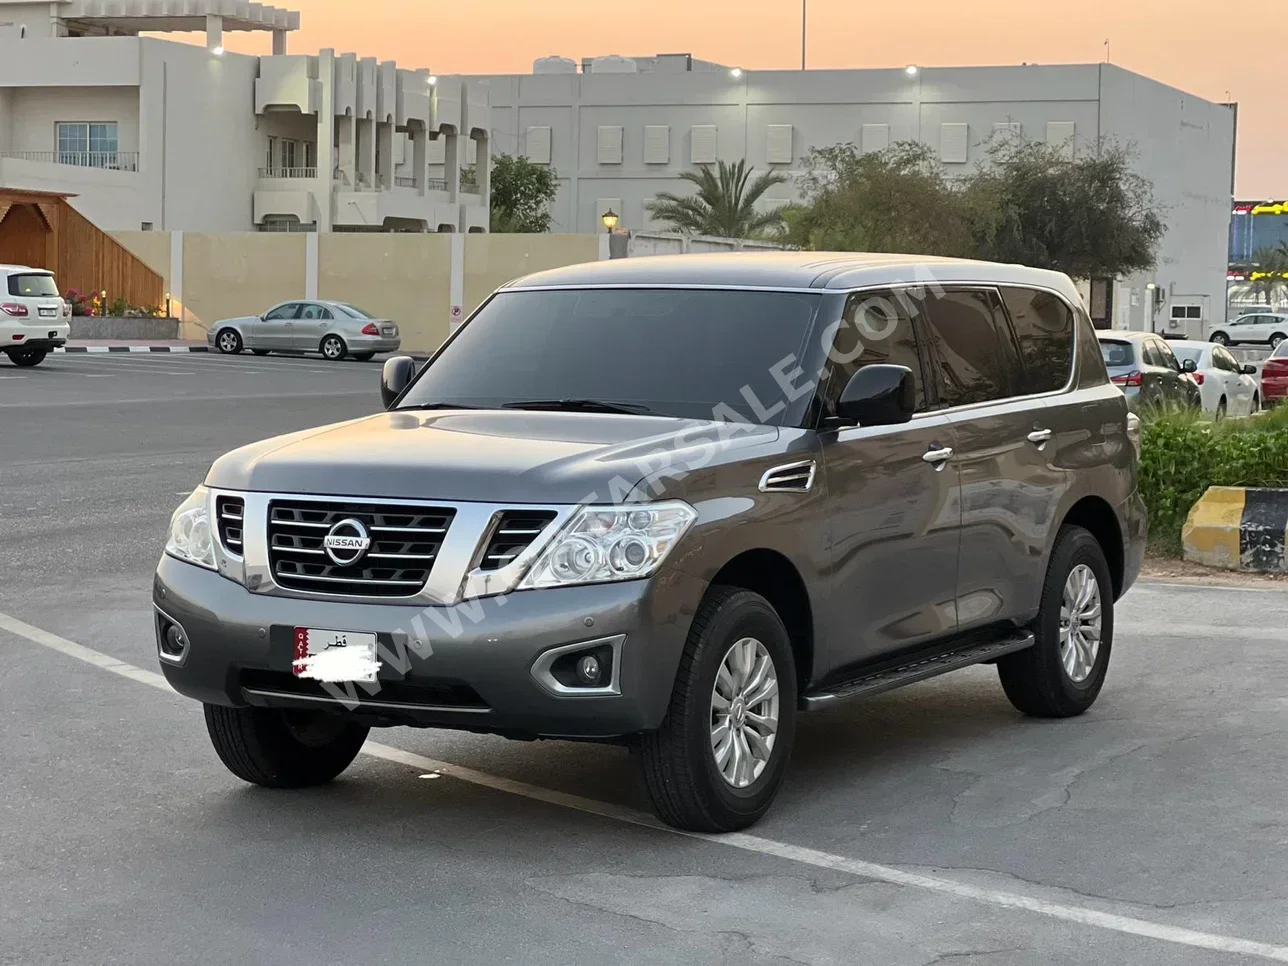 Nissan  Patrol  SE  2019  Automatic  47,000 Km  8 Cylinder  Four Wheel Drive (4WD)  SUV  Gray